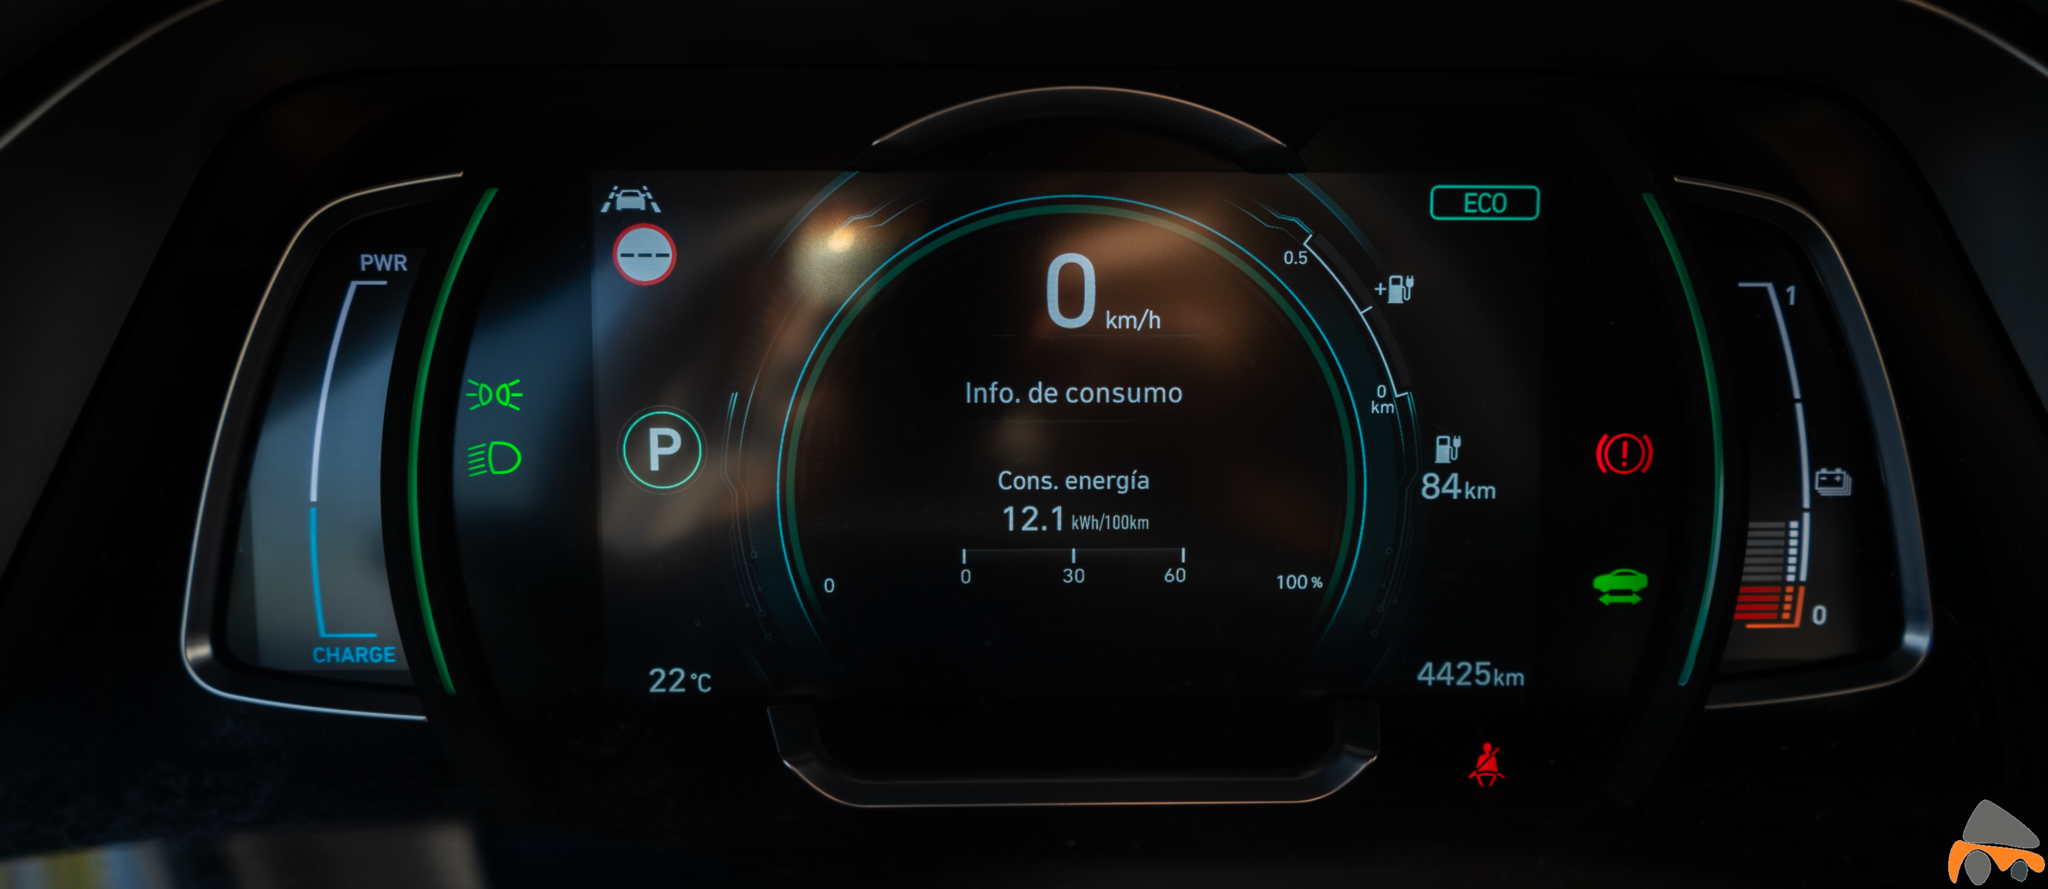 Tacometro Hyundai Ioniq Electrico - Prueba Hyundai Ioniq EV 2020: Un referente para la movilidad eléctrica